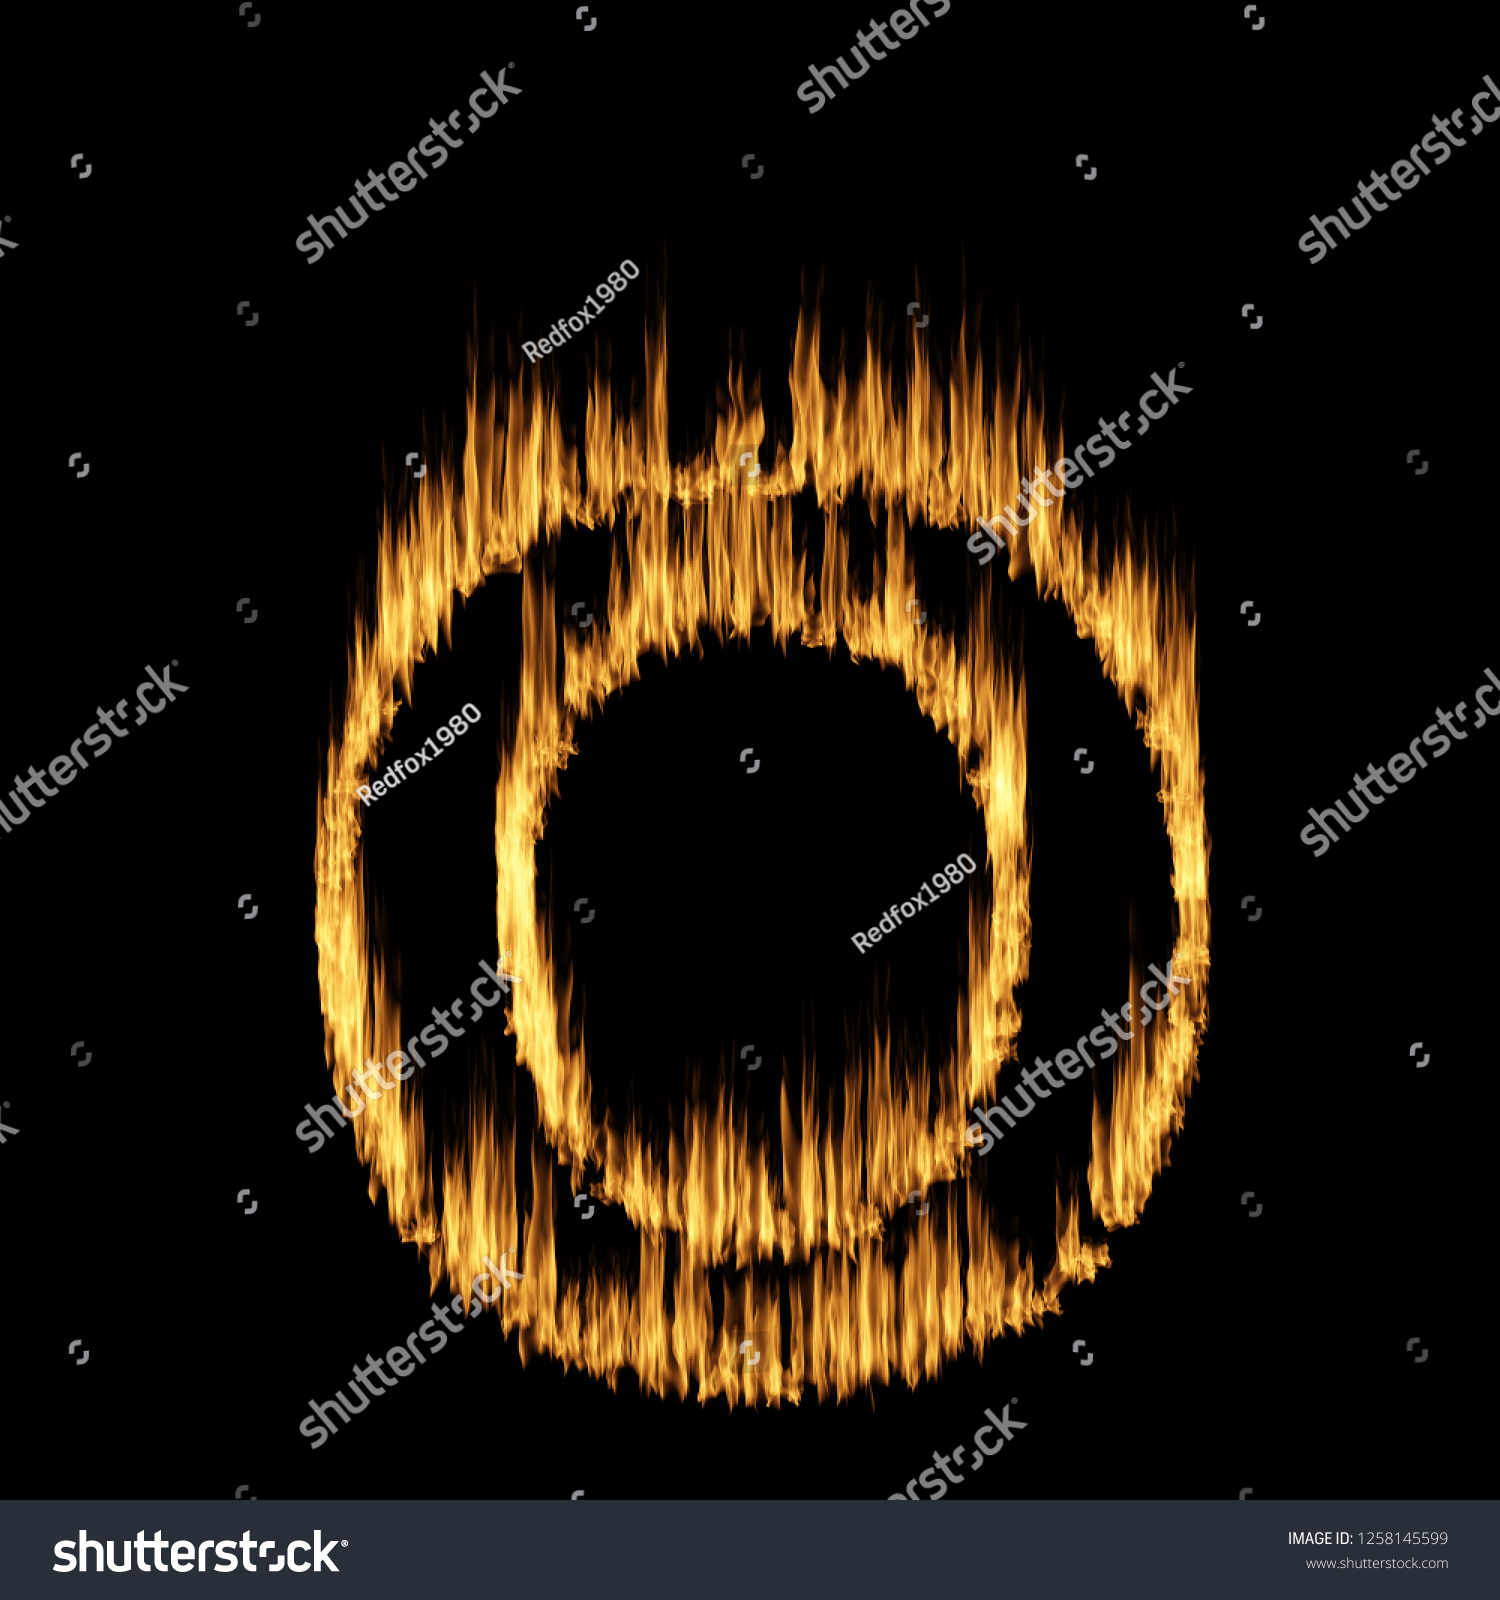 Burning Letters Fire Flame Digit Number Stock Illustration 1258145599